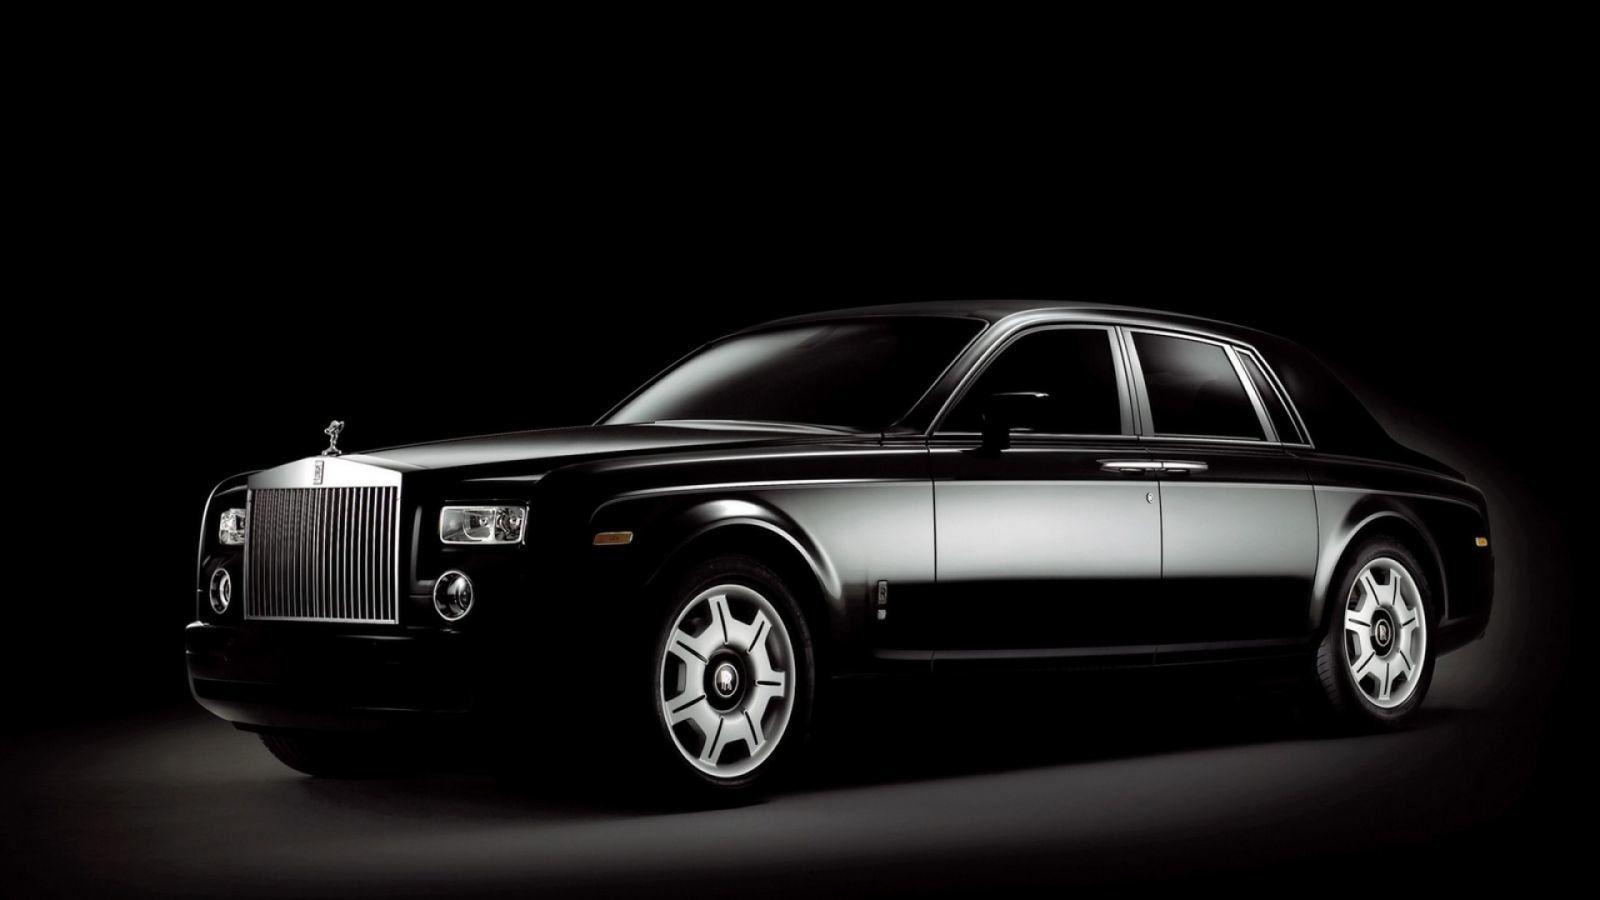 For Your Desktop: Rolls Royce Phantom Wallpaper, 41 Top Quality